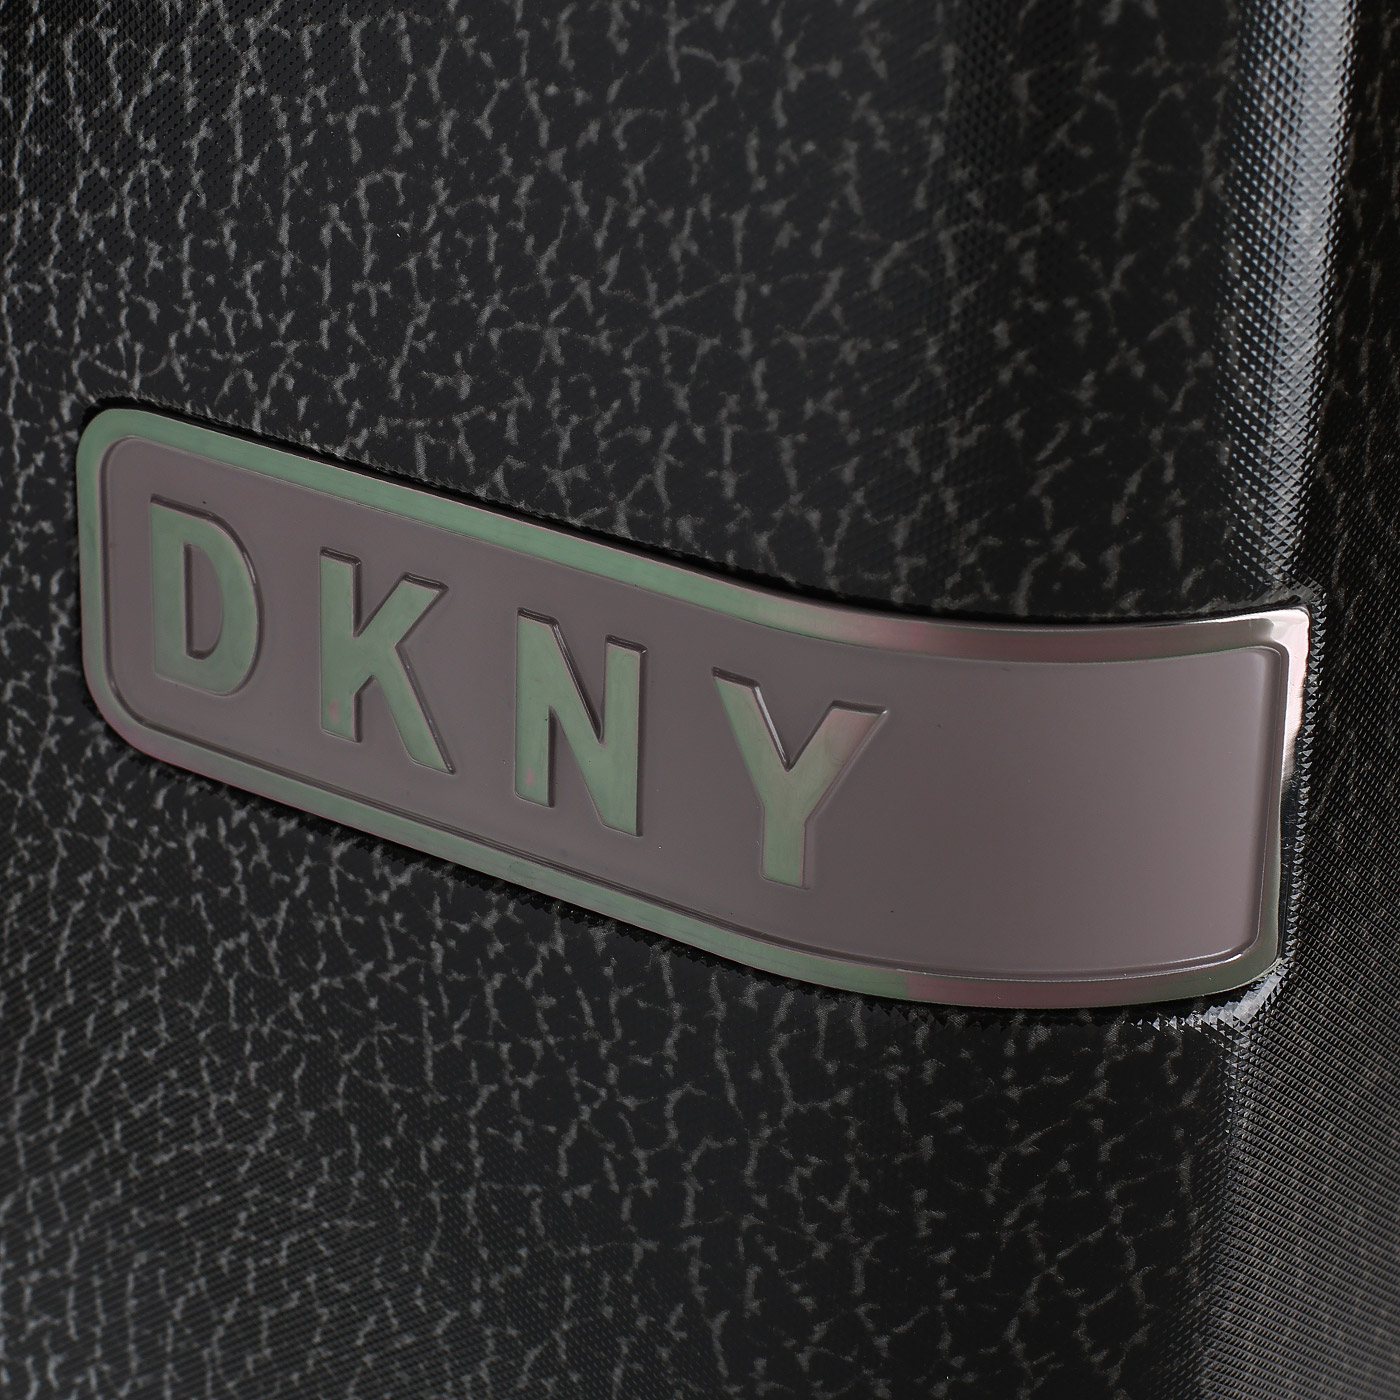 Чемодан большой L из ABS-пластика с кодовым замком DKNY DKNY-339 Rapture